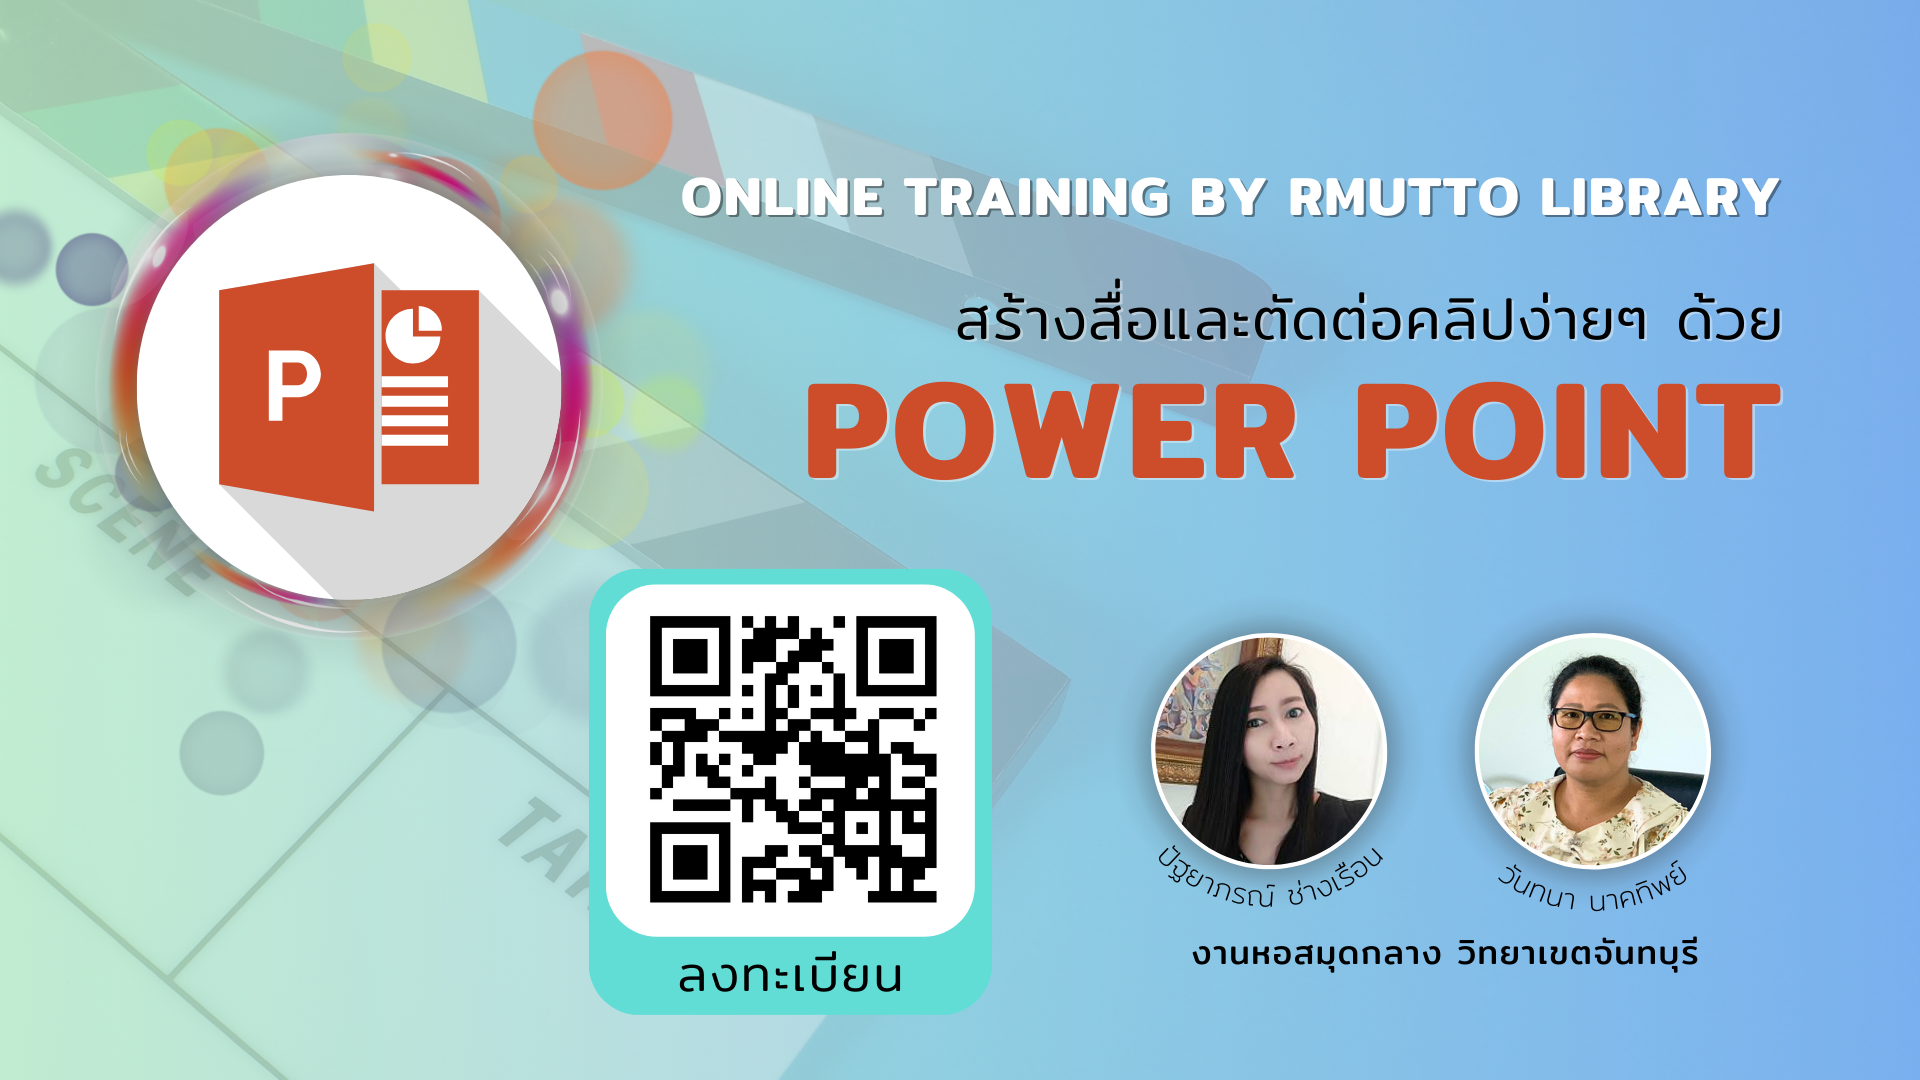 Online Training by RMUTTO Library หัวข้อ : การสร้างและตัดต่อคลิปง่ายๆ ด้วย Power Point